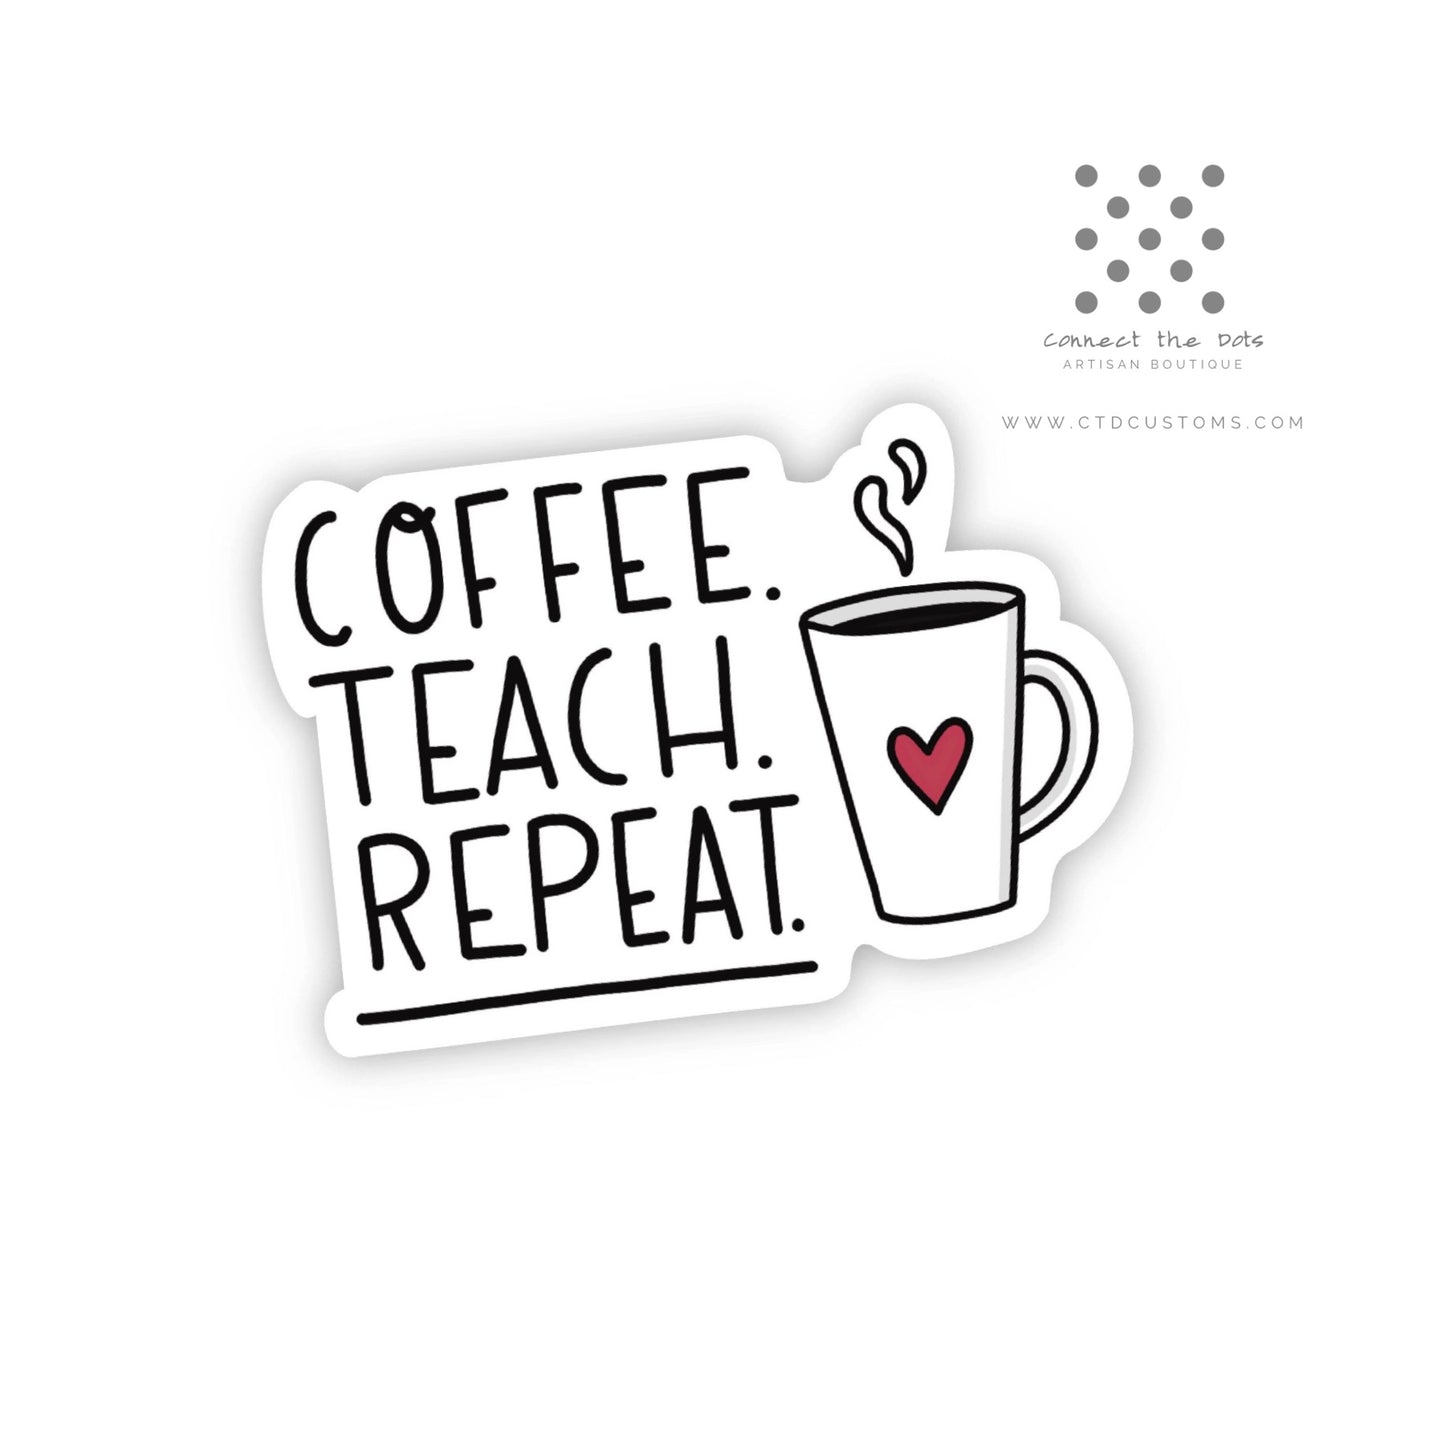 Coffee. Teach. Repeat. Vinyl Sticker